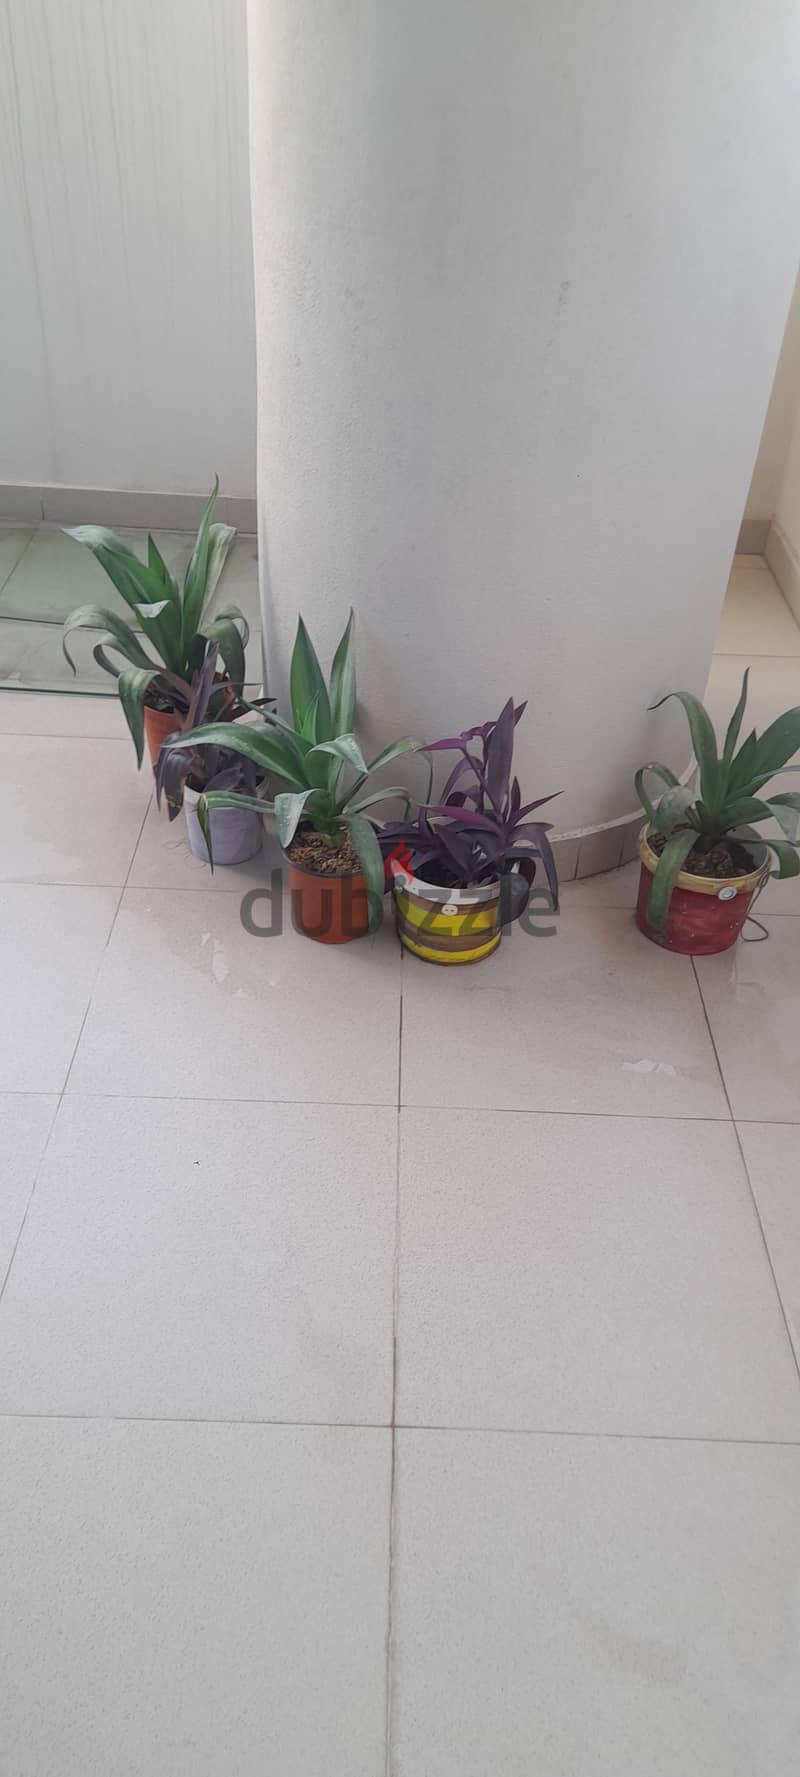 Plants for sale 1